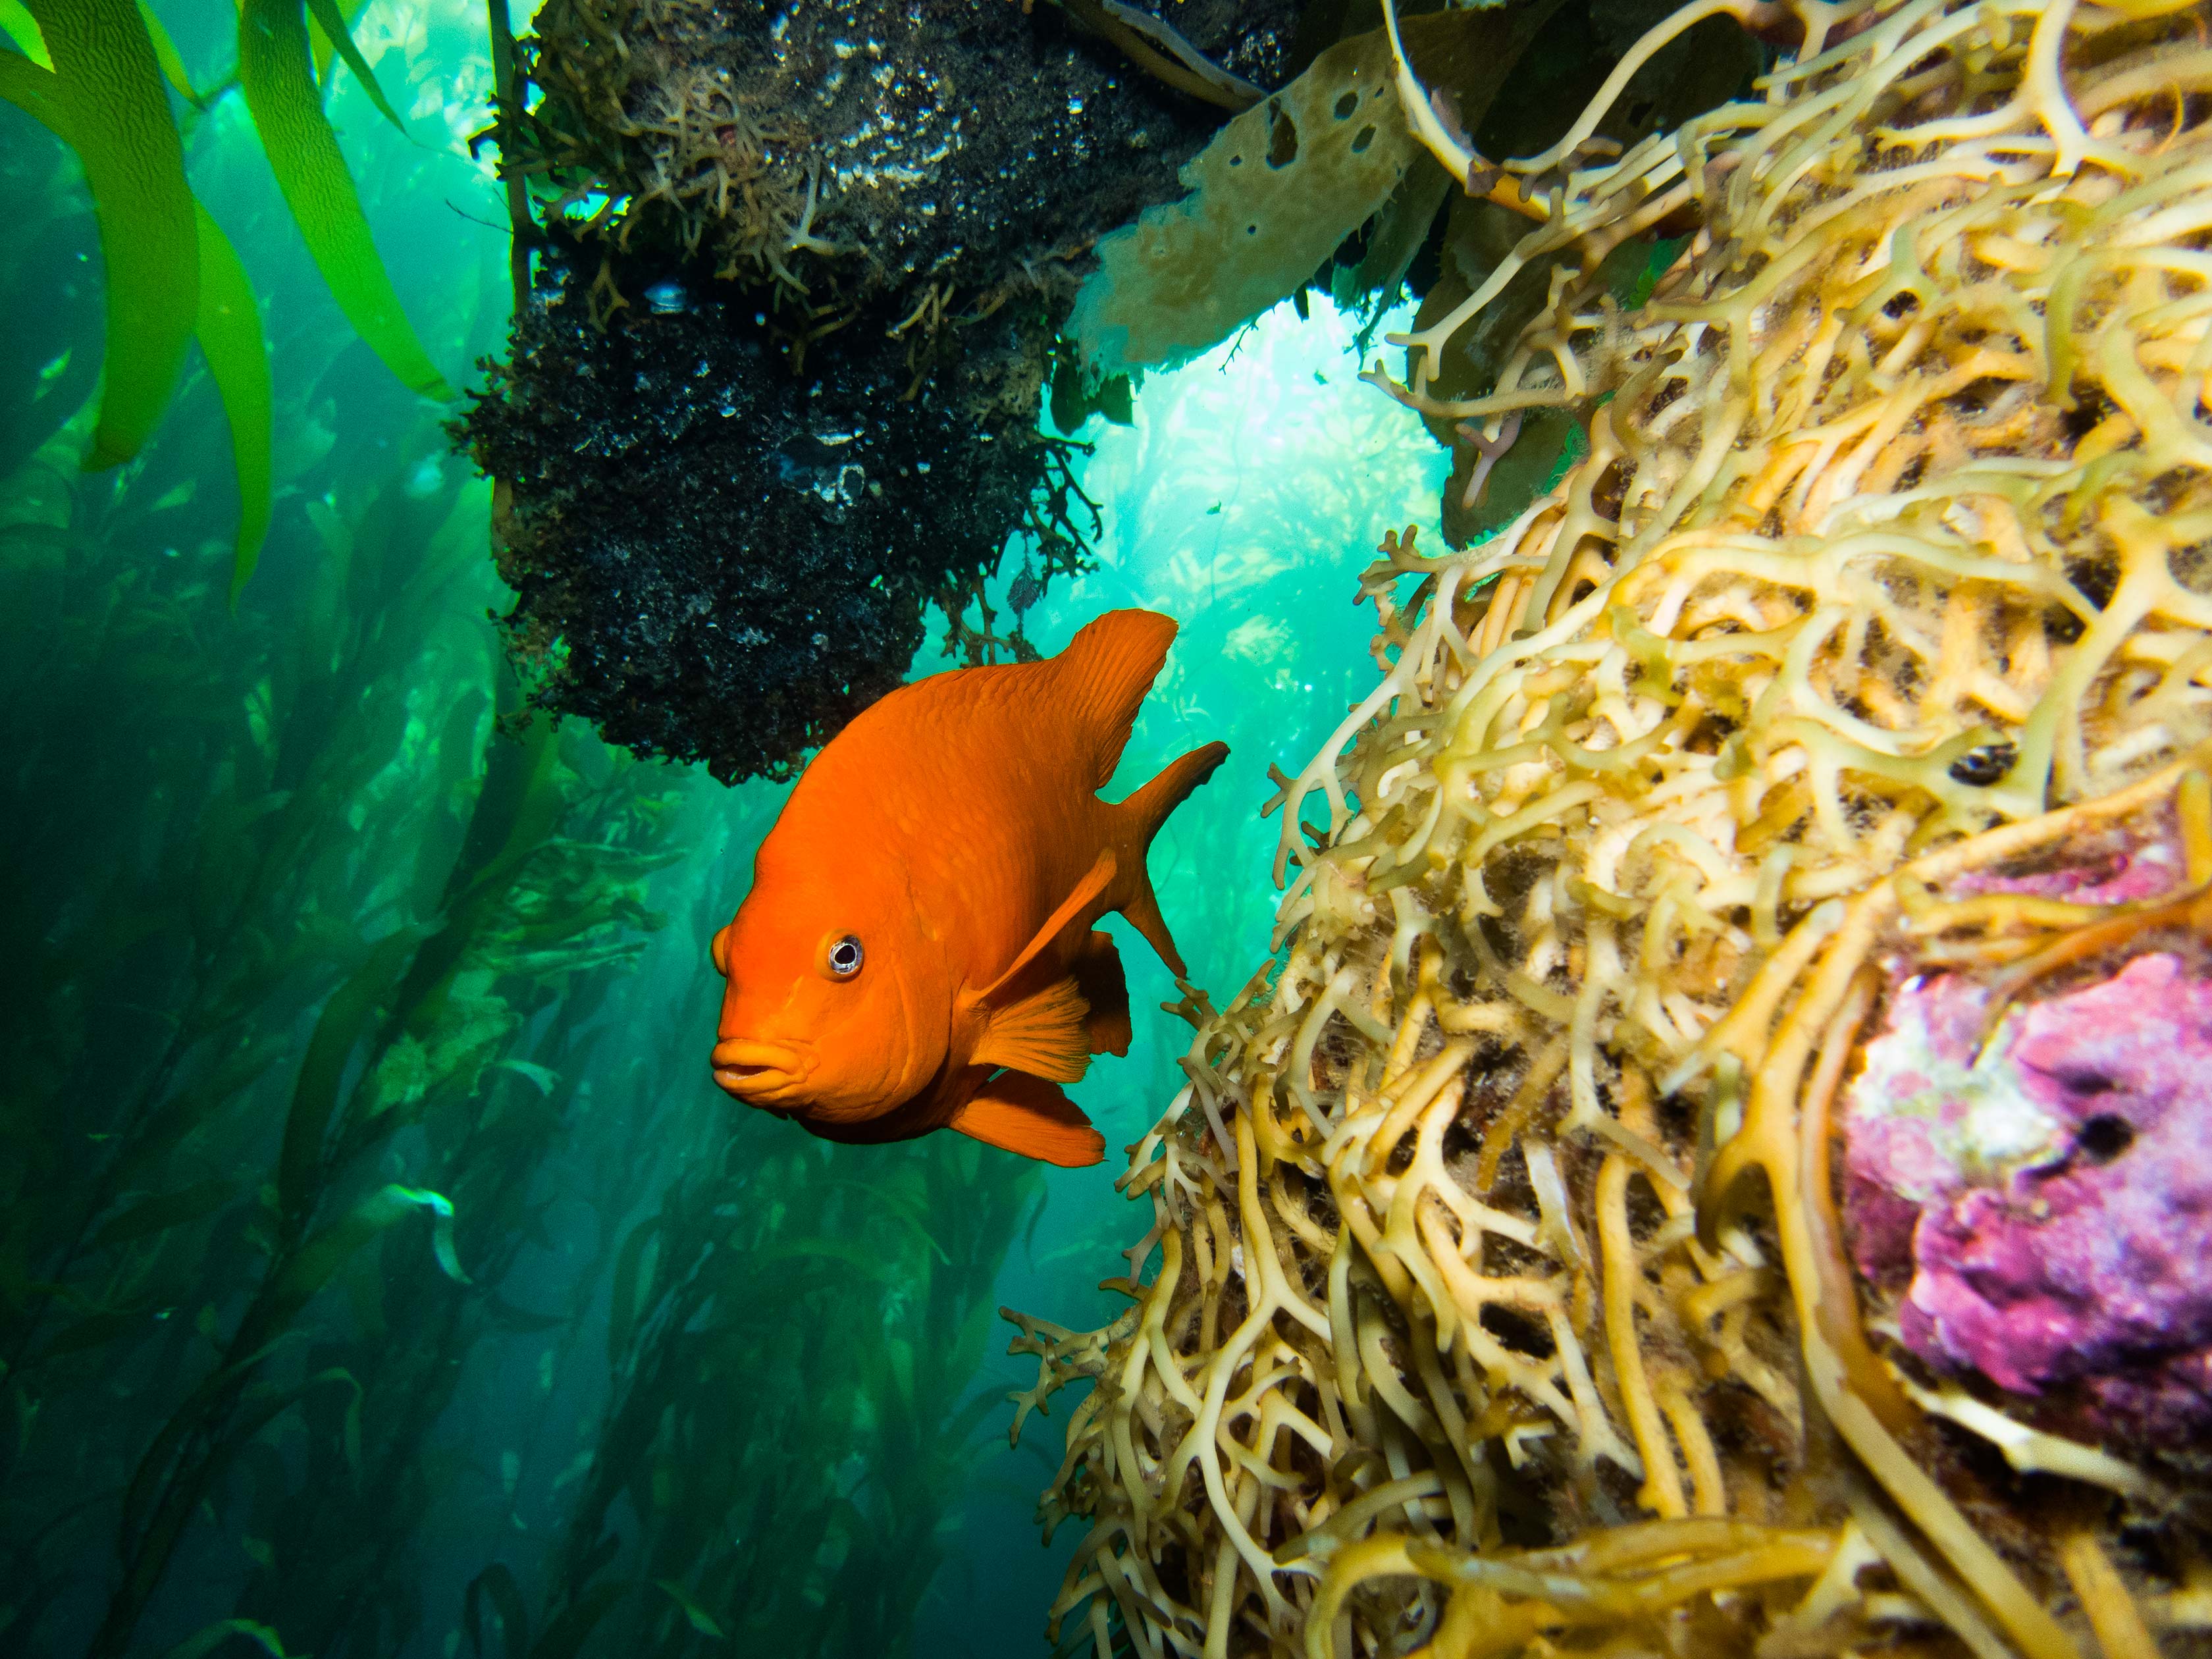 Garibaldi fish in kelp forest